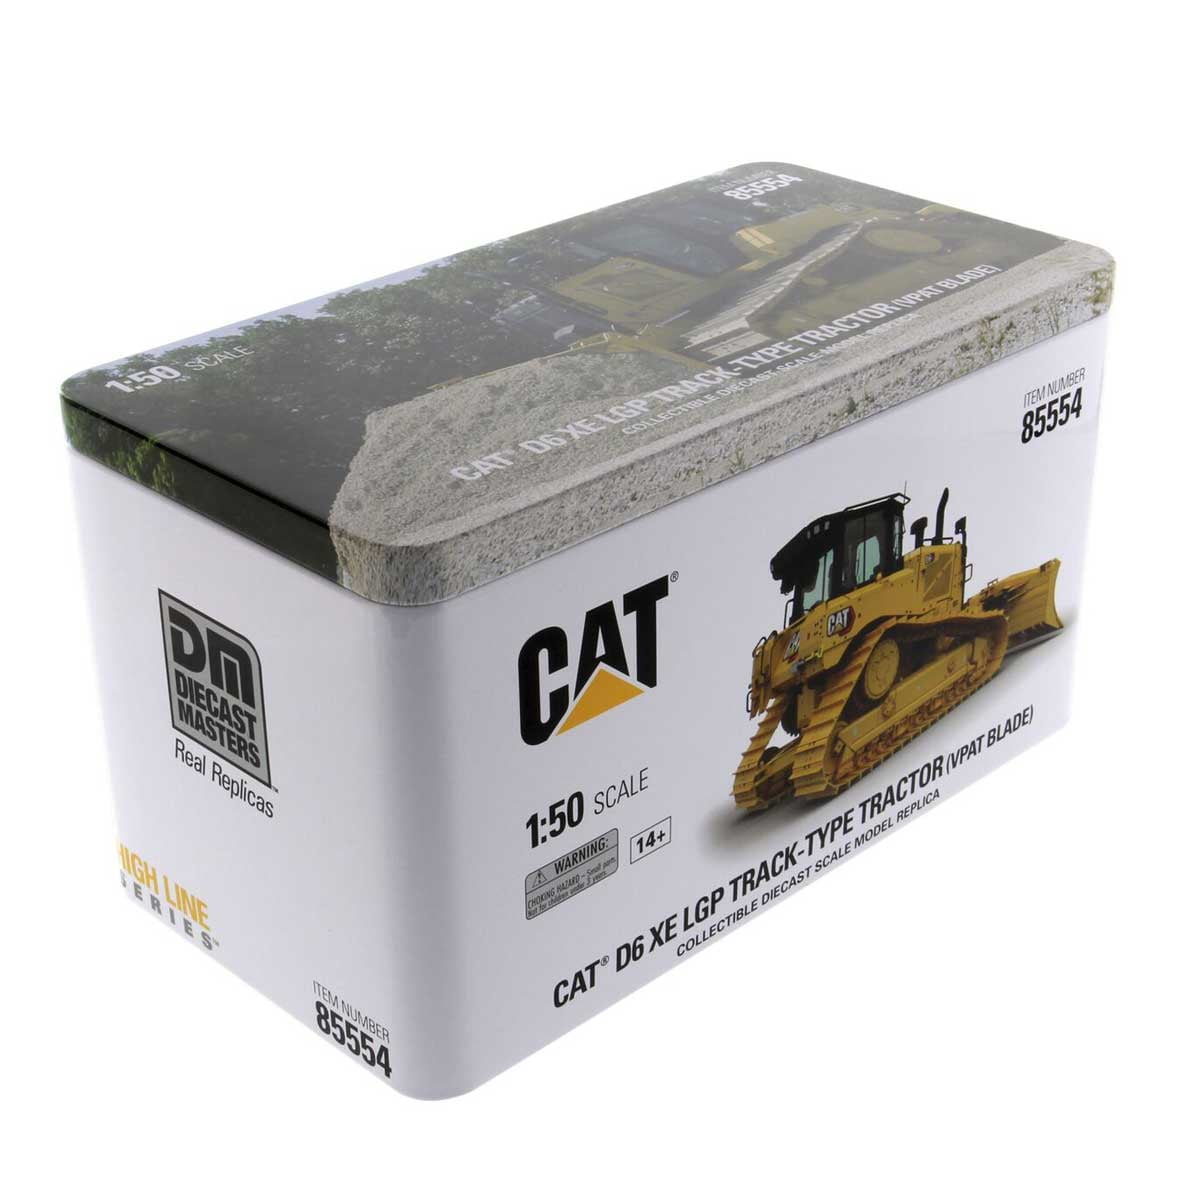 CAT Caterpillar D6 XE LGP Track Type Tractor Dozer with VPAT Blade and  Operator 